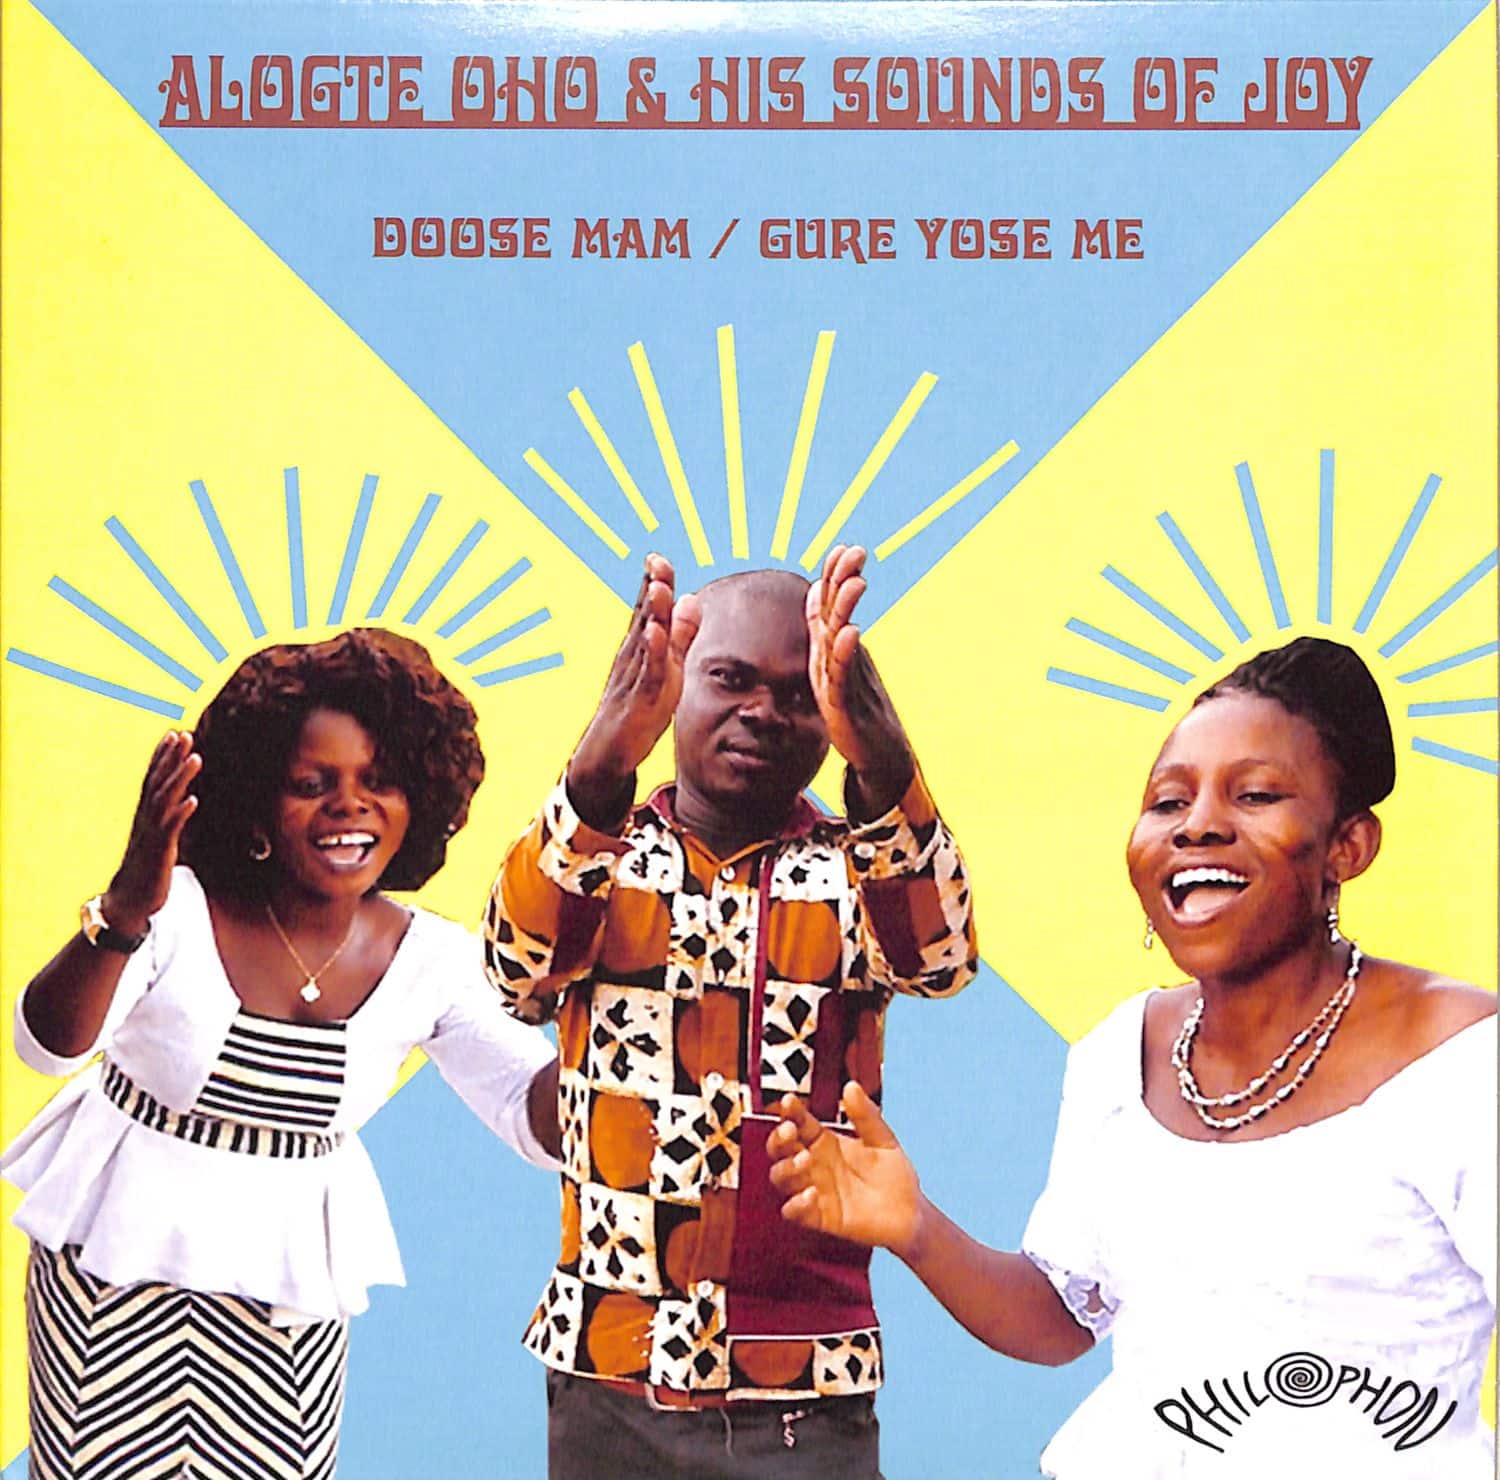 Alogte Oho & His Sounds of Joy - DOOSE MAM / GURE YOSE ME 